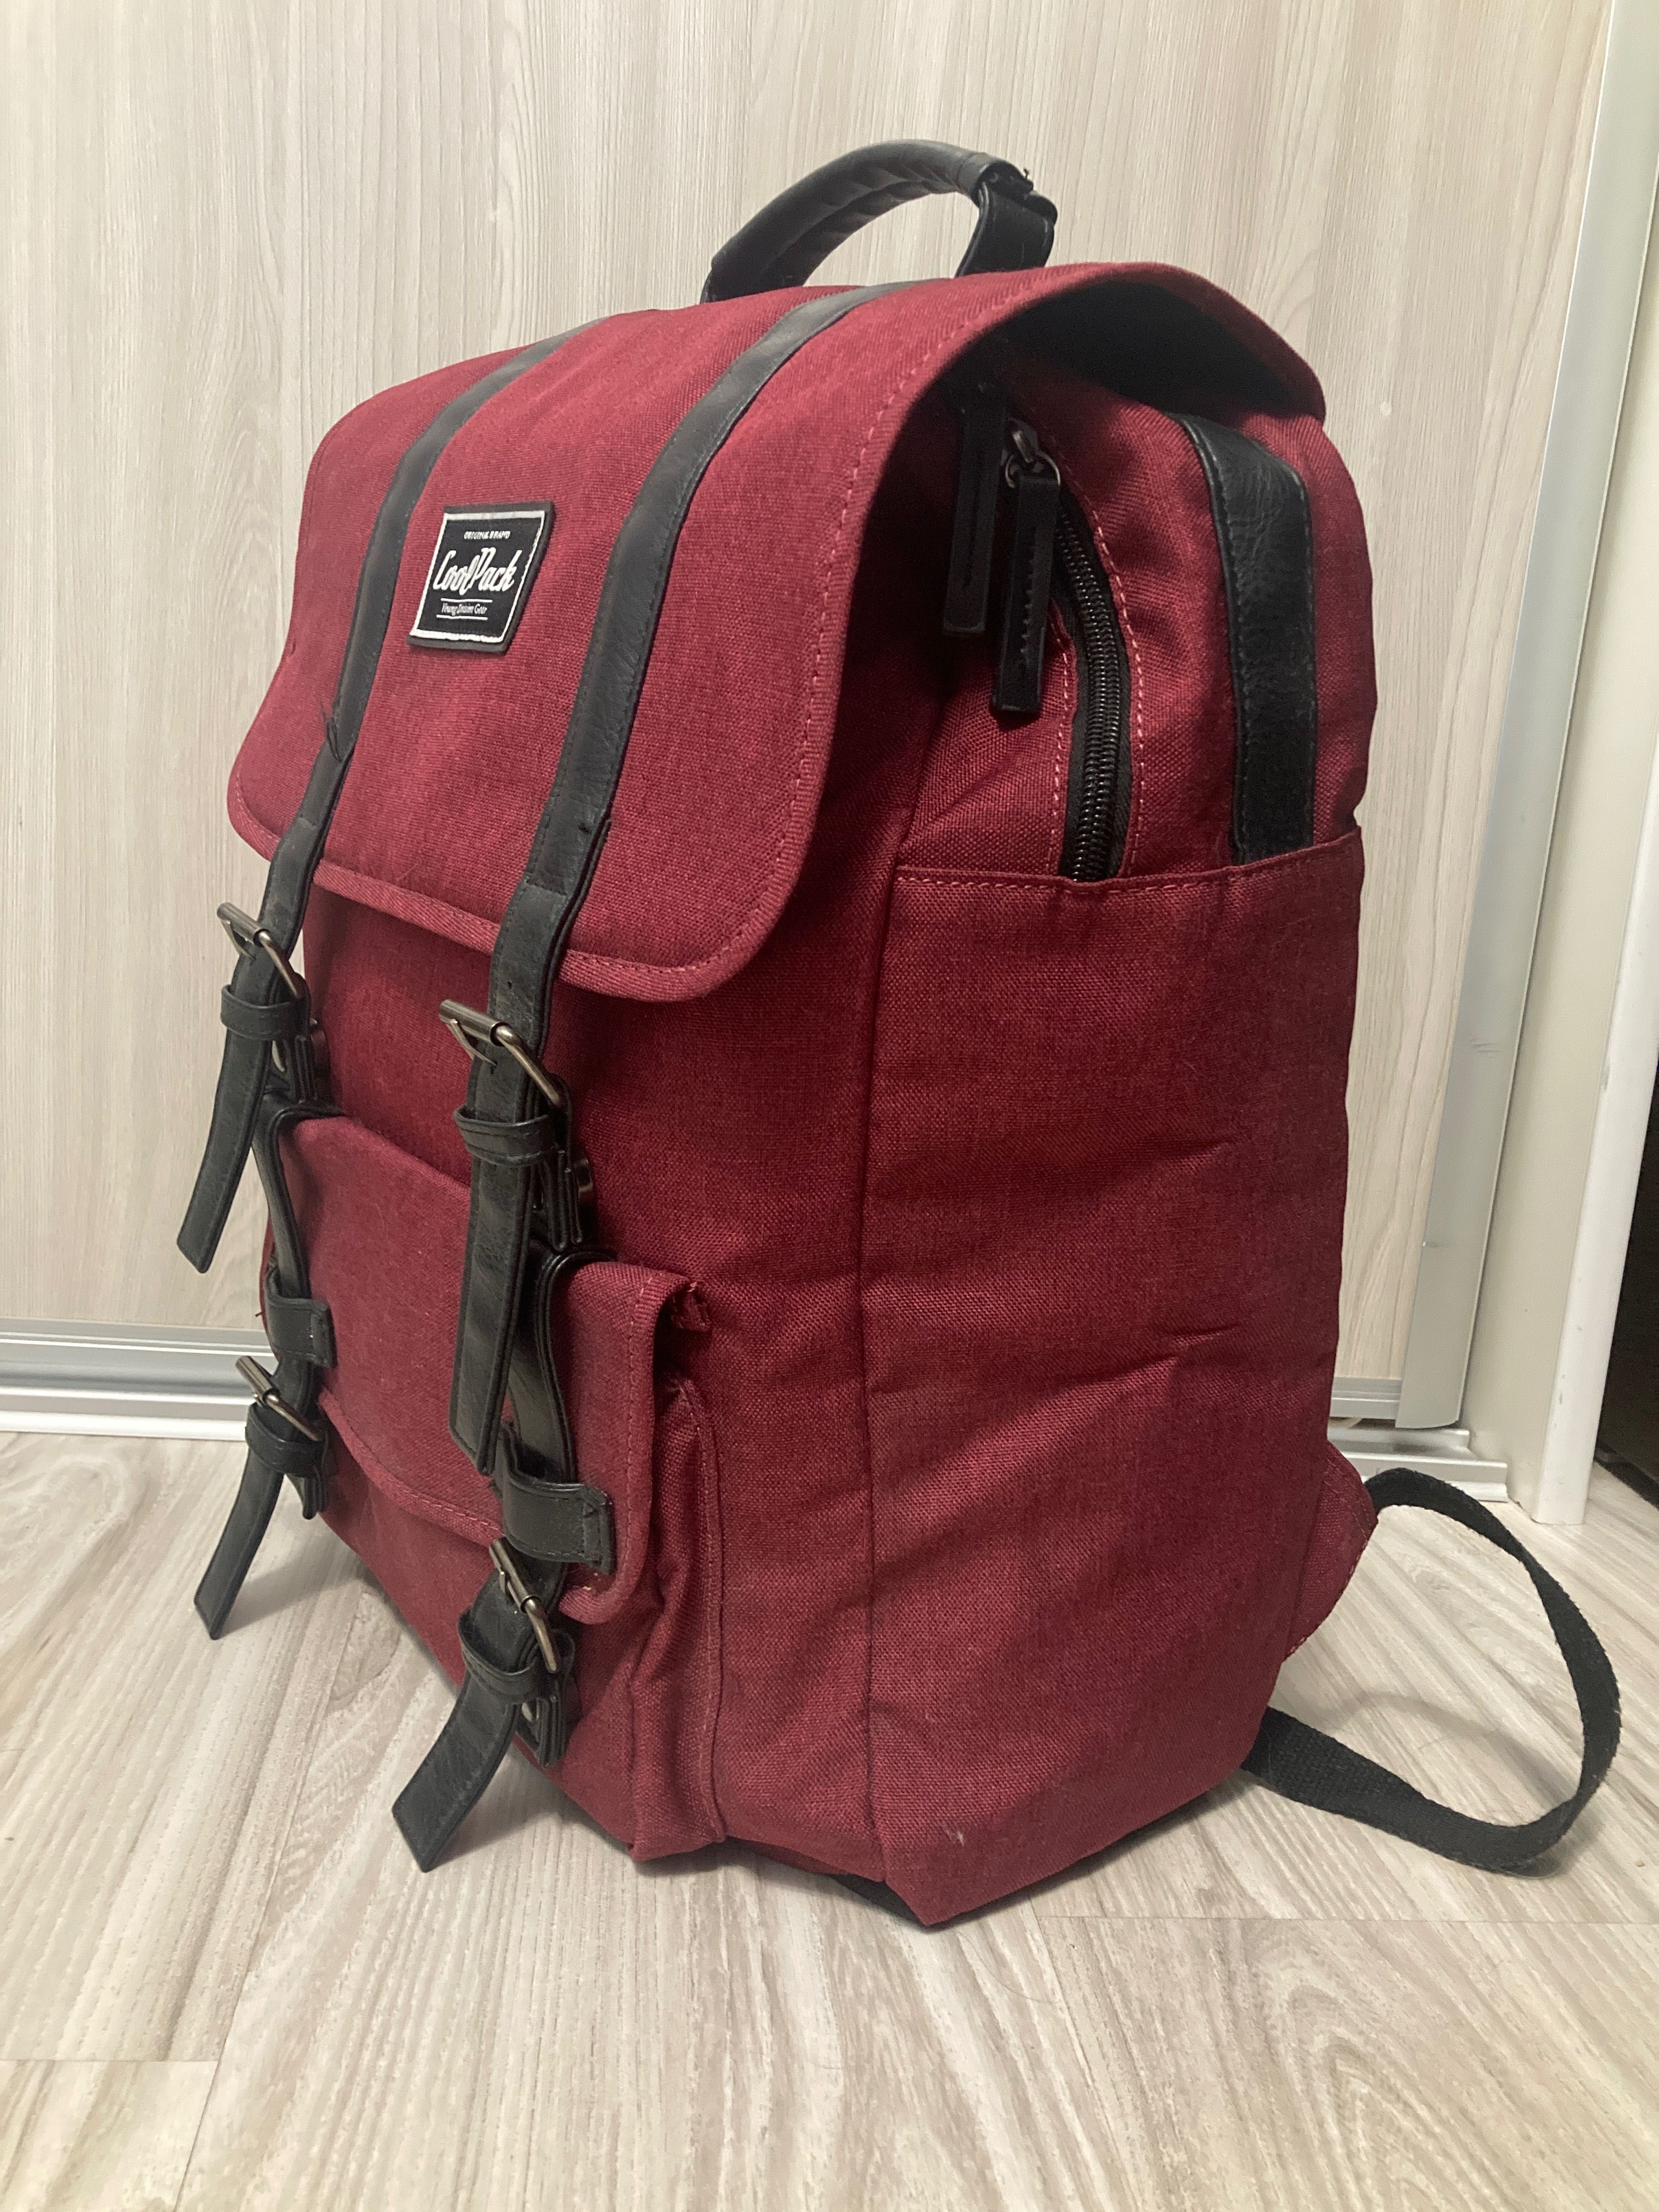 Plecak Coolpack - nowy